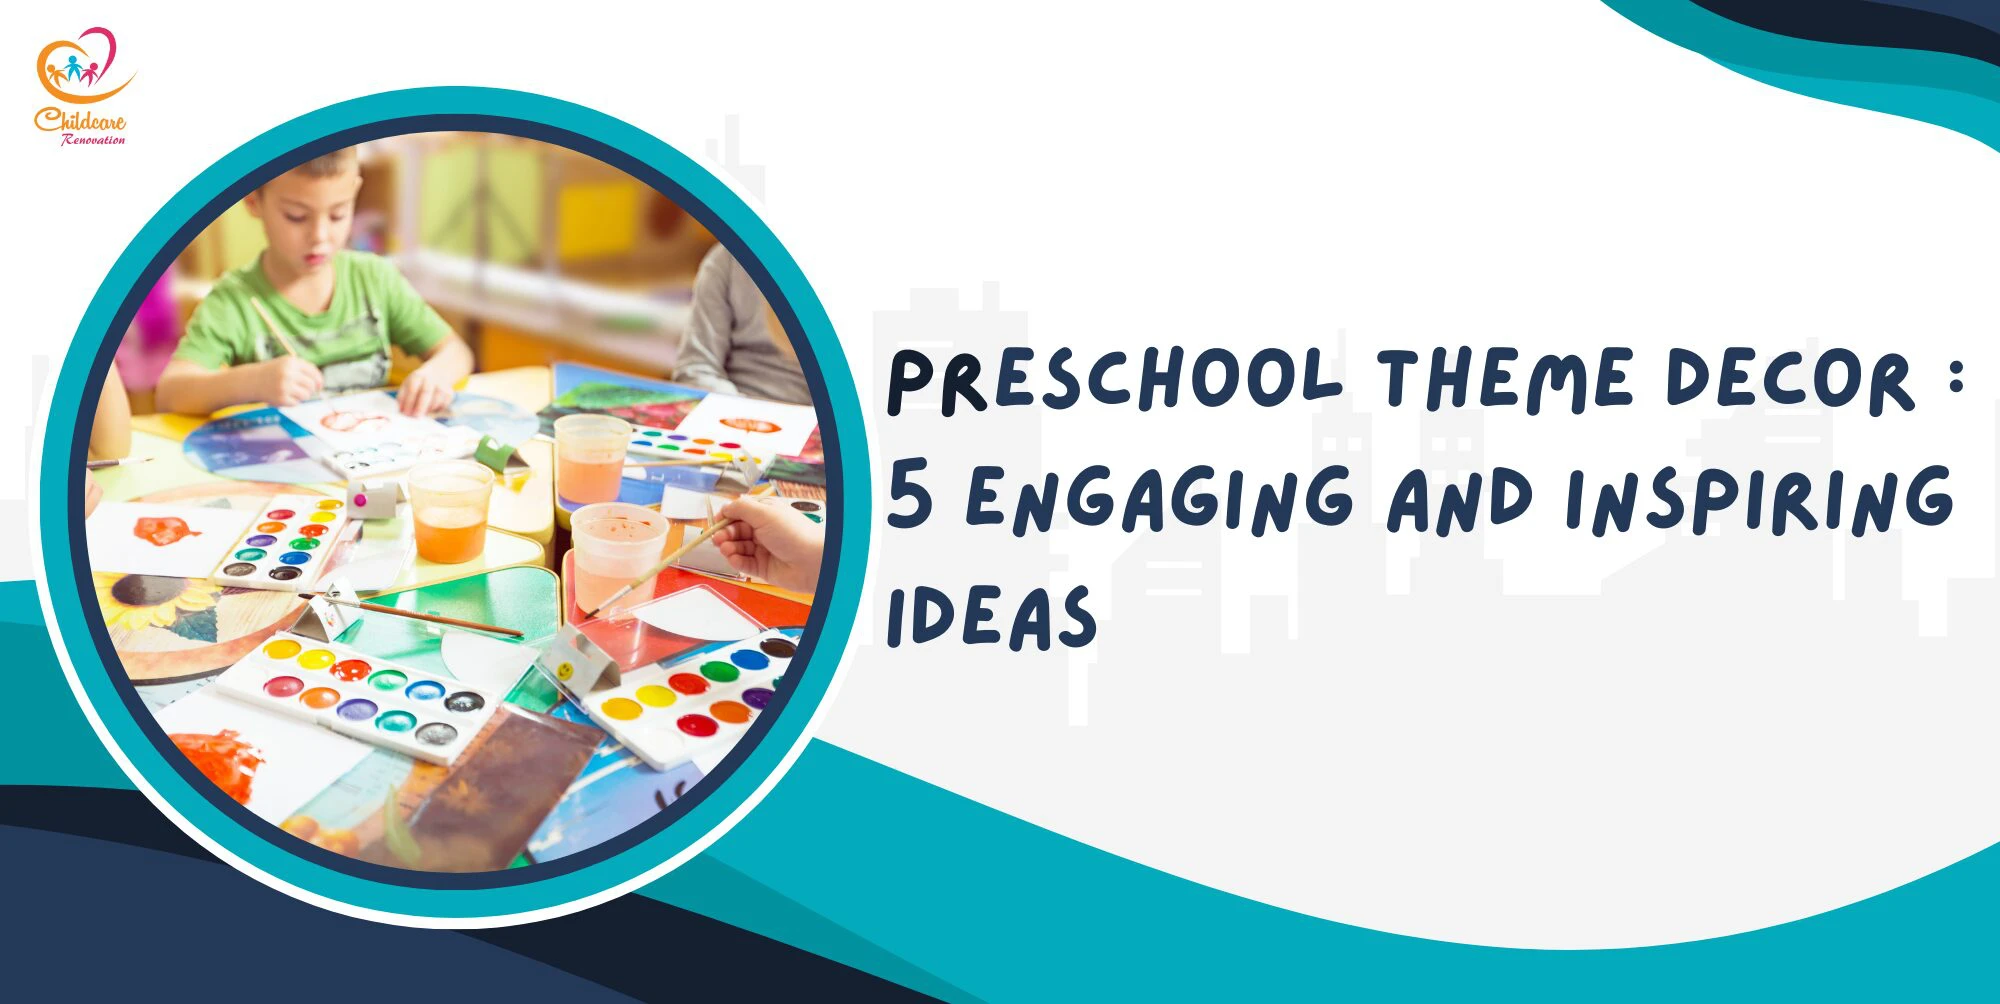 Preschool Theme Decor : 5 Engaging and Inspiring Ideas